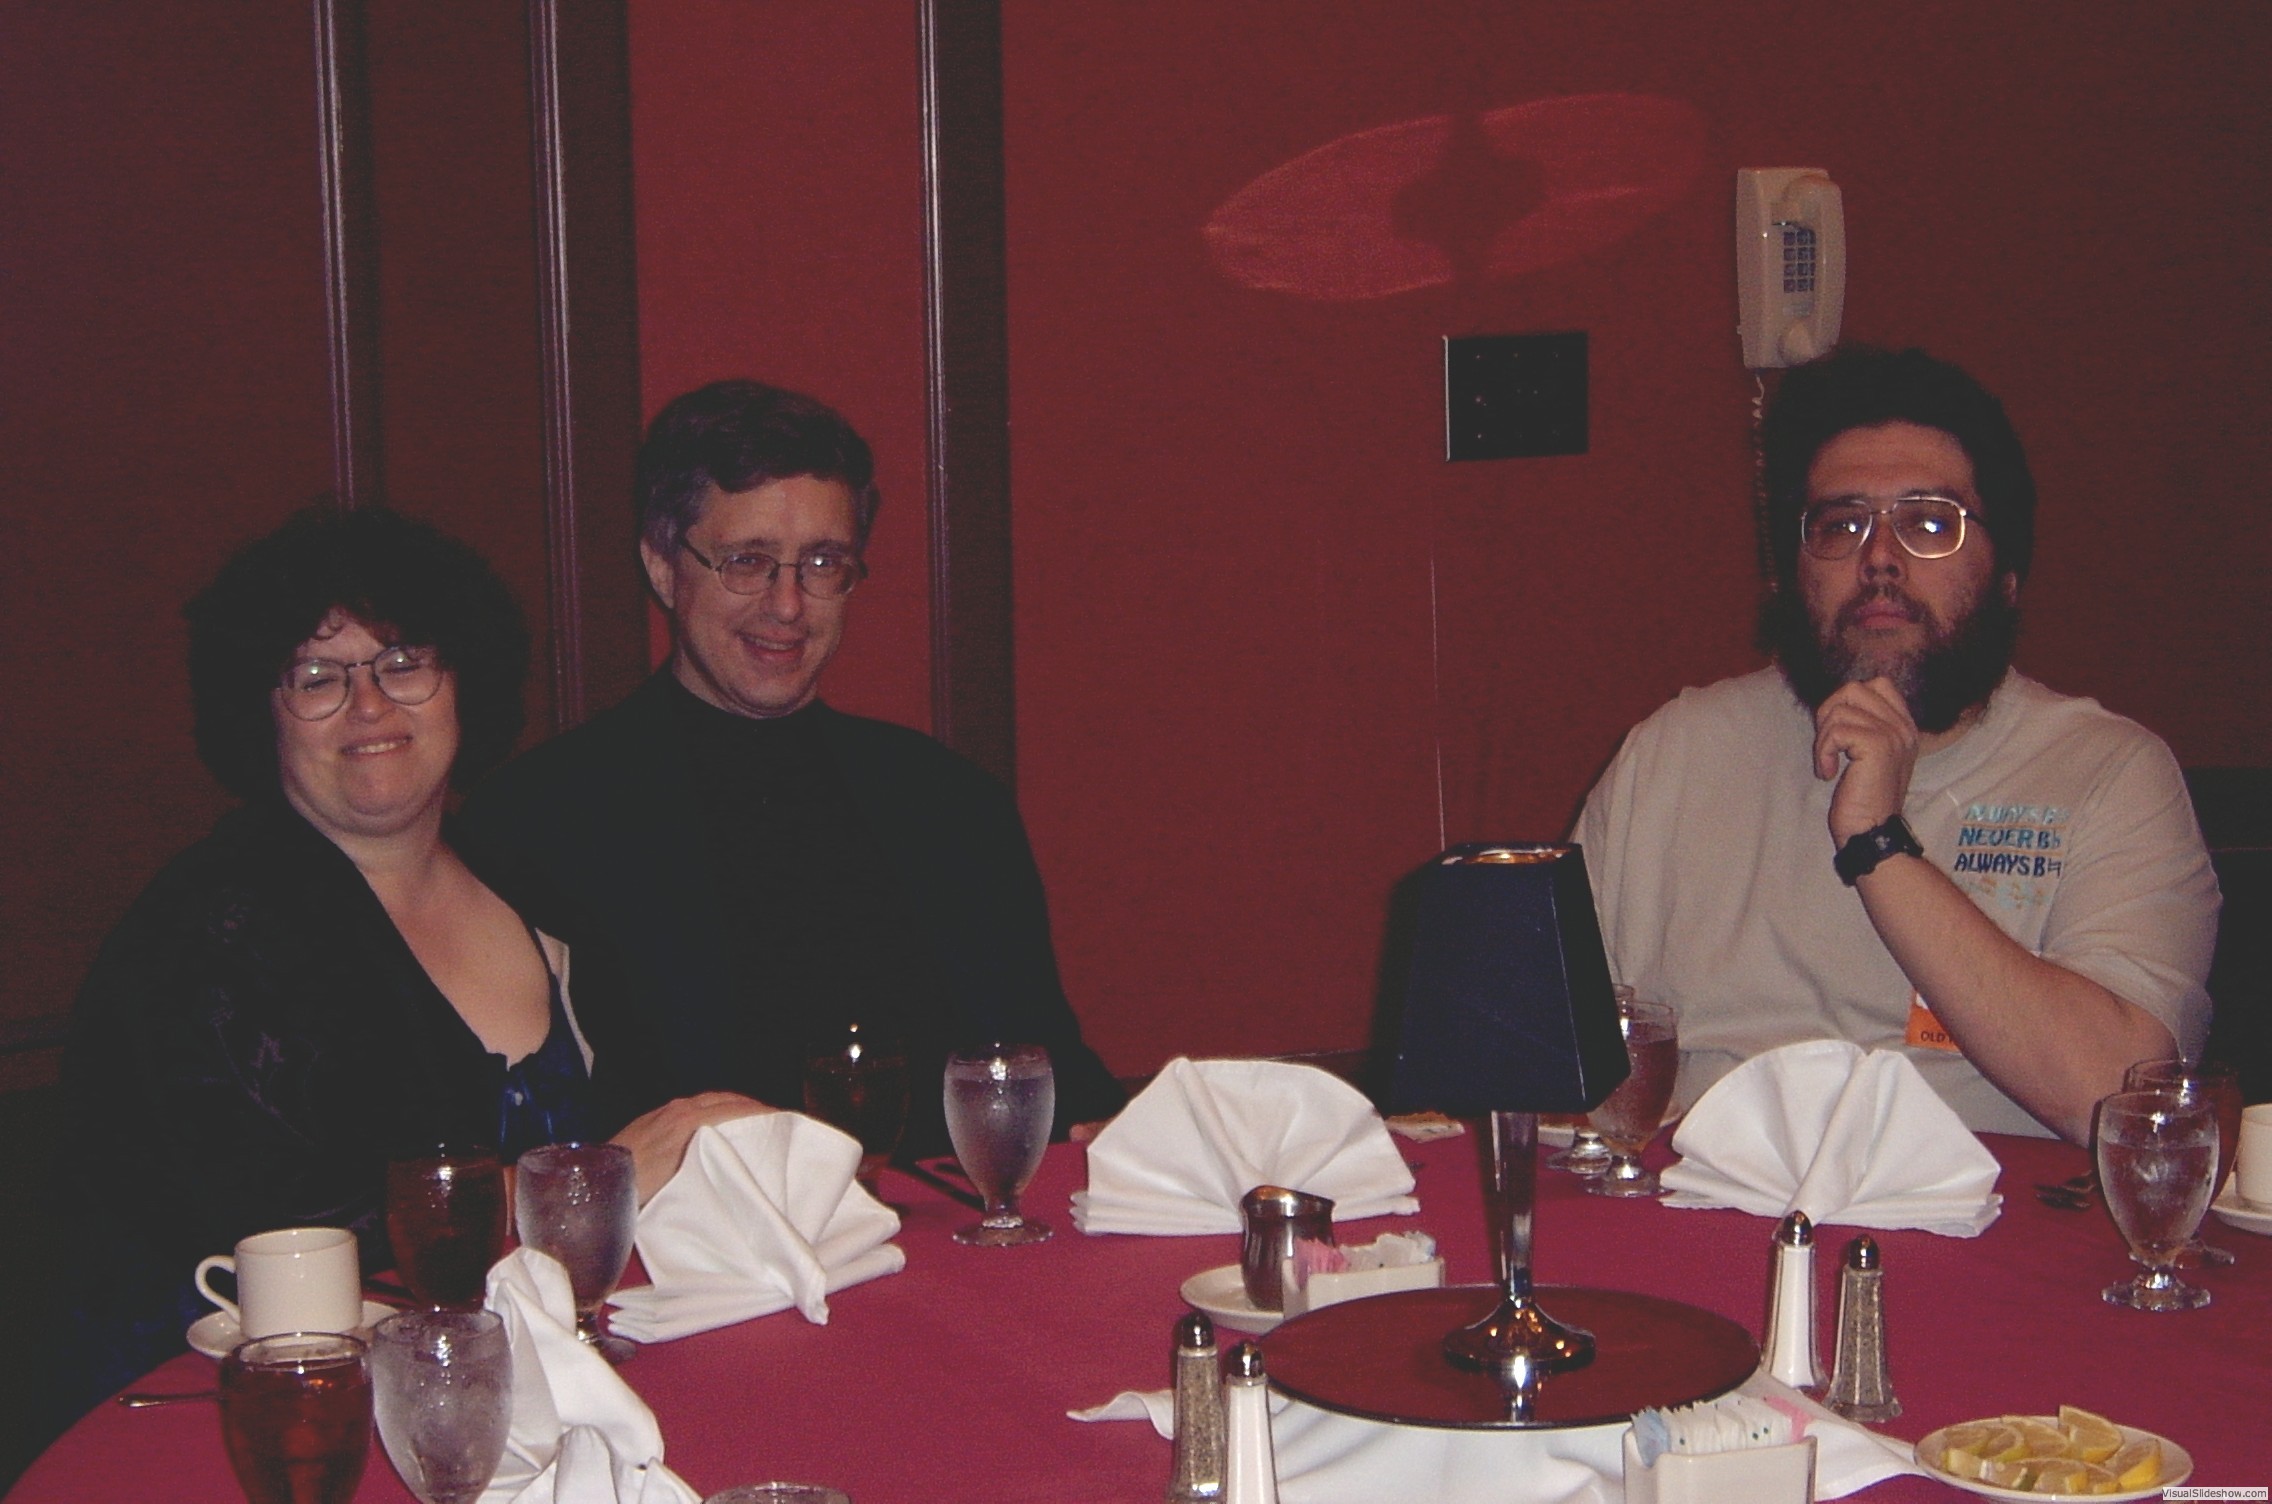 Mary, Matt and Steve at the banquet